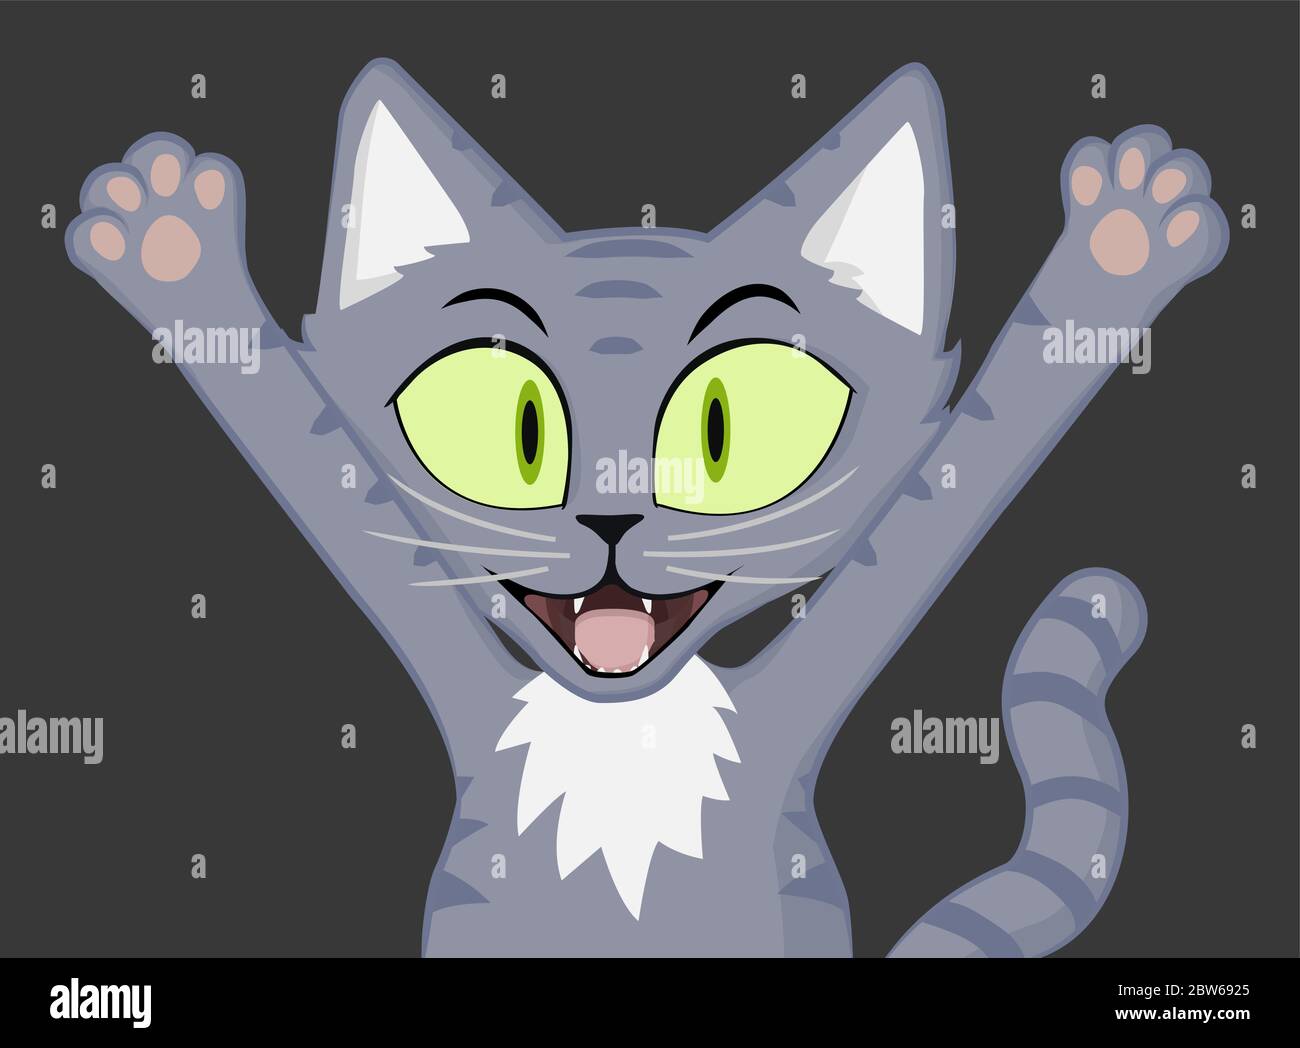 Katze grau jubeln und winken begeistert, Aufmerksamkeit erregend, Cartoon Charakter Farbe Vektor Illustration, horizontal Stock Vektor